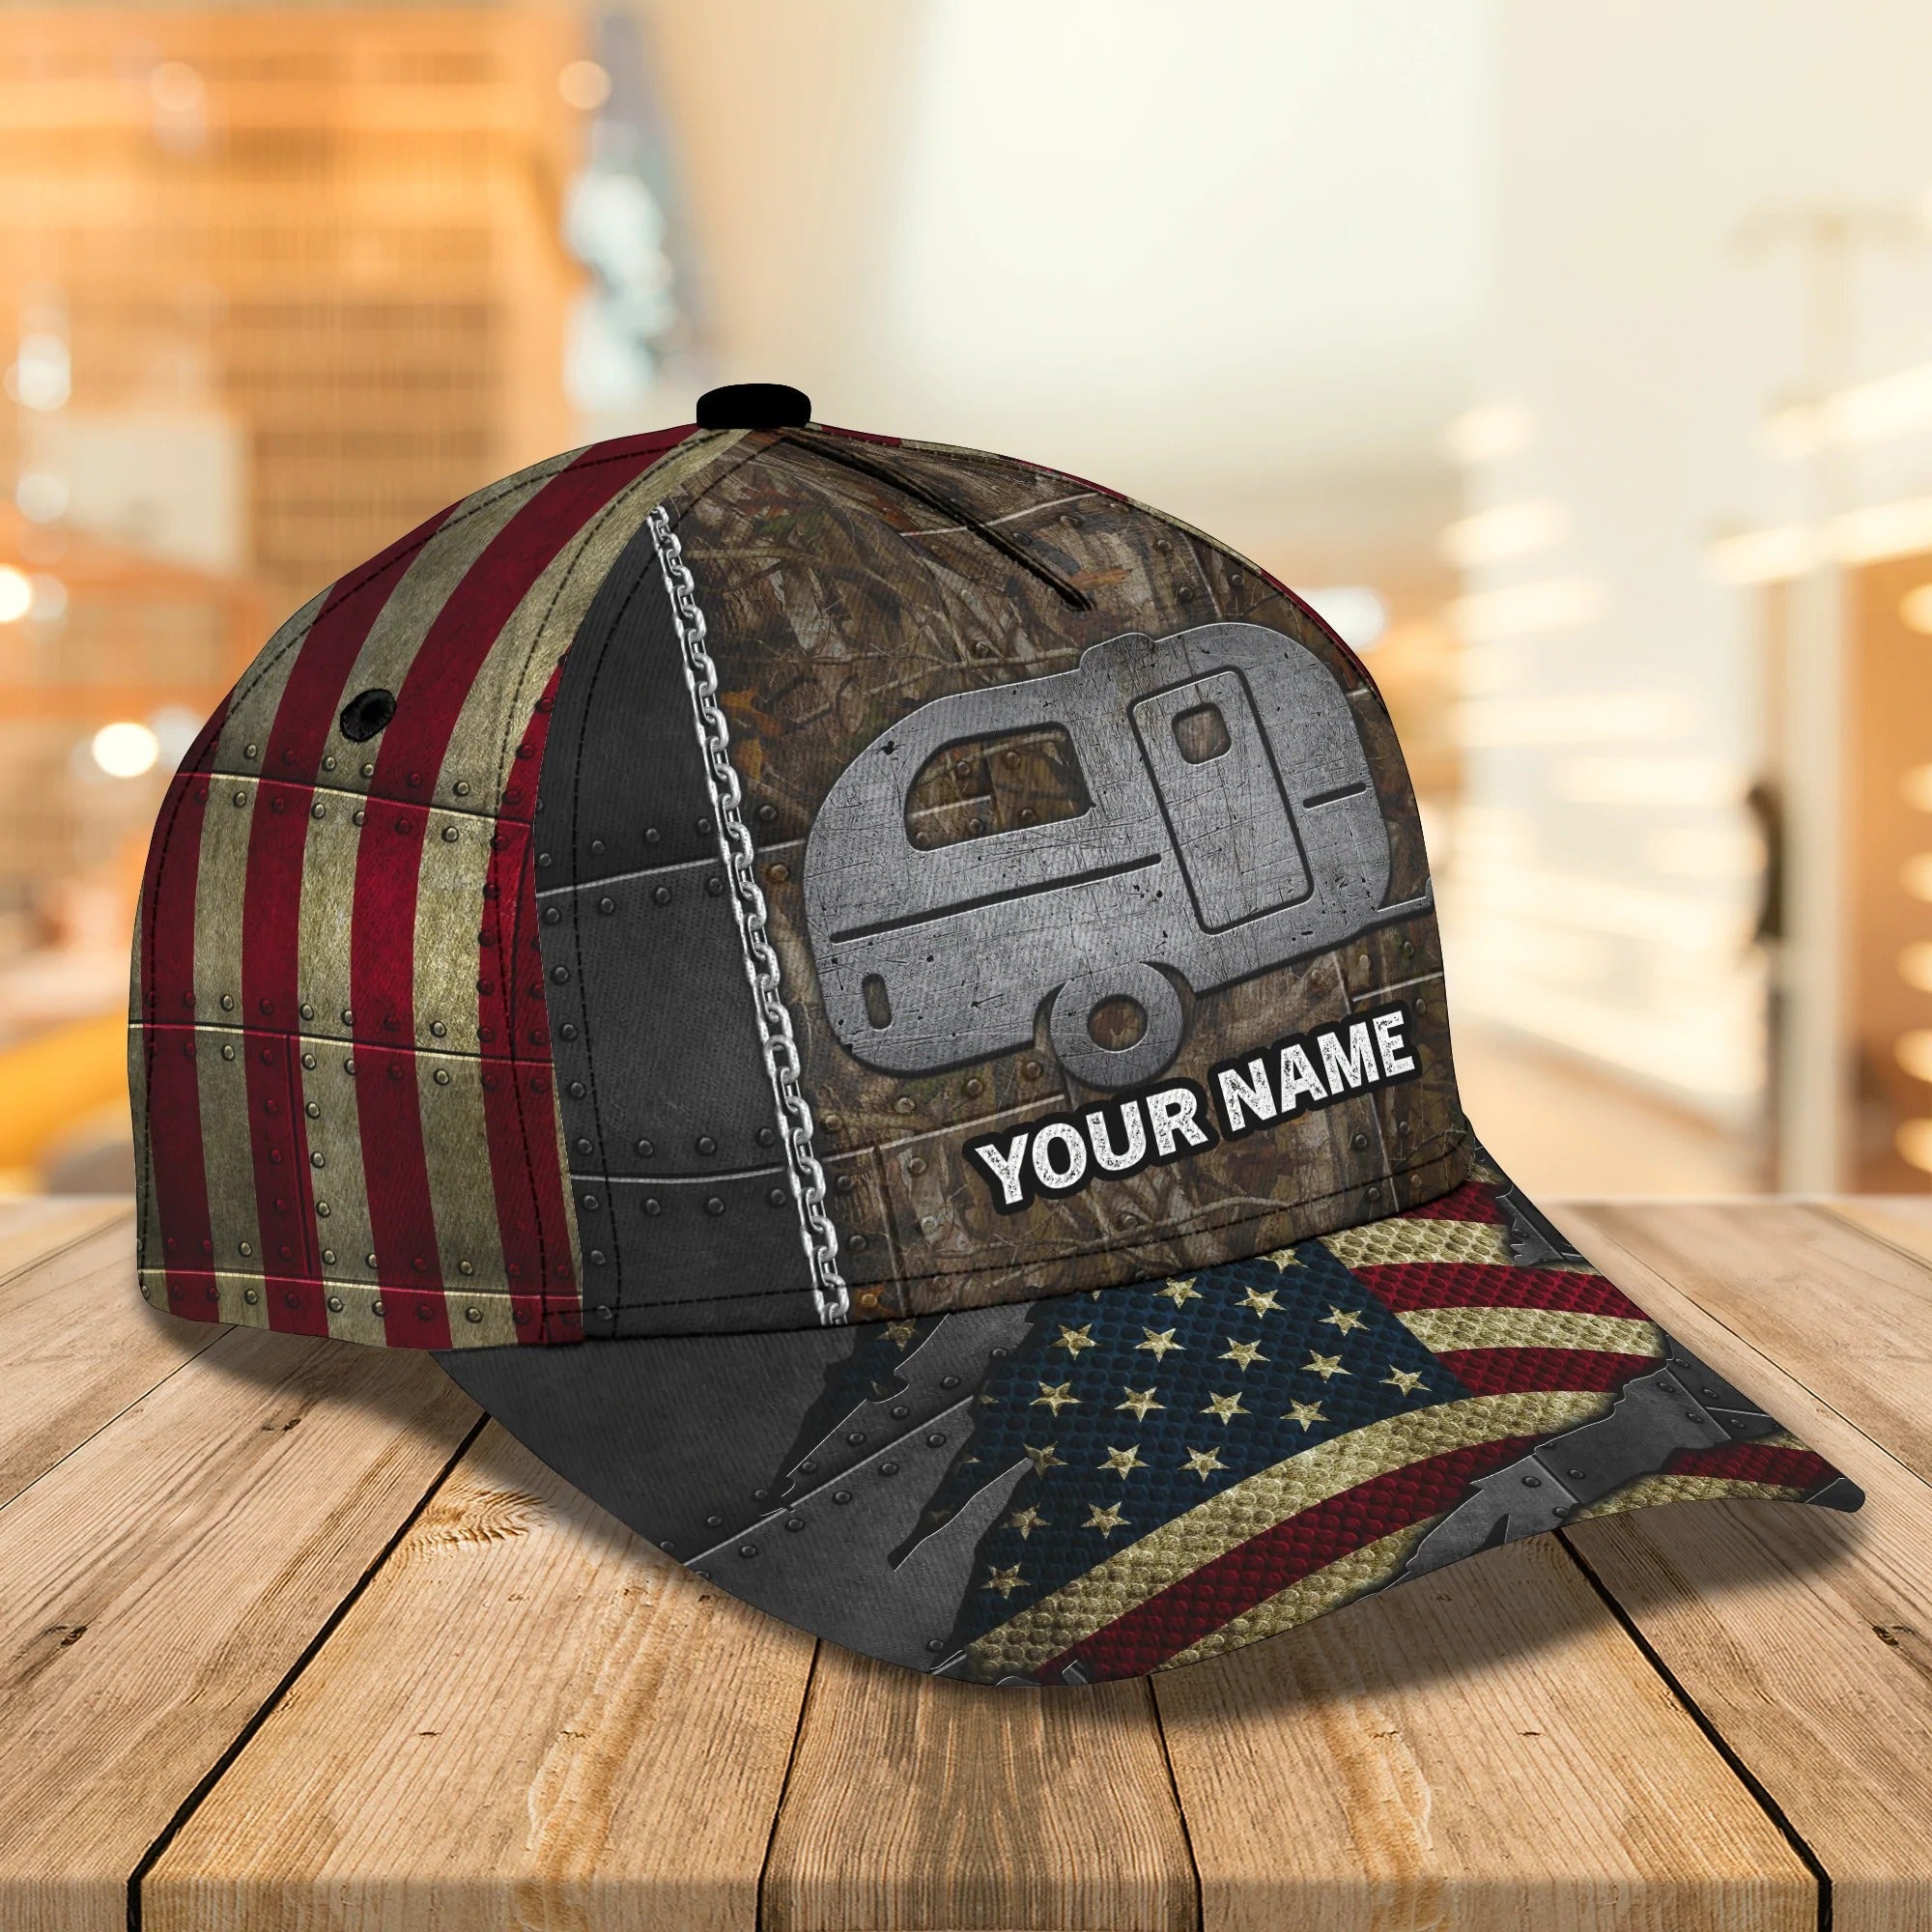 Customized 3D Full Printed Camping Caravan Cap Hat/ Baseball Camping Cap Hat/ Camp Cap Hat